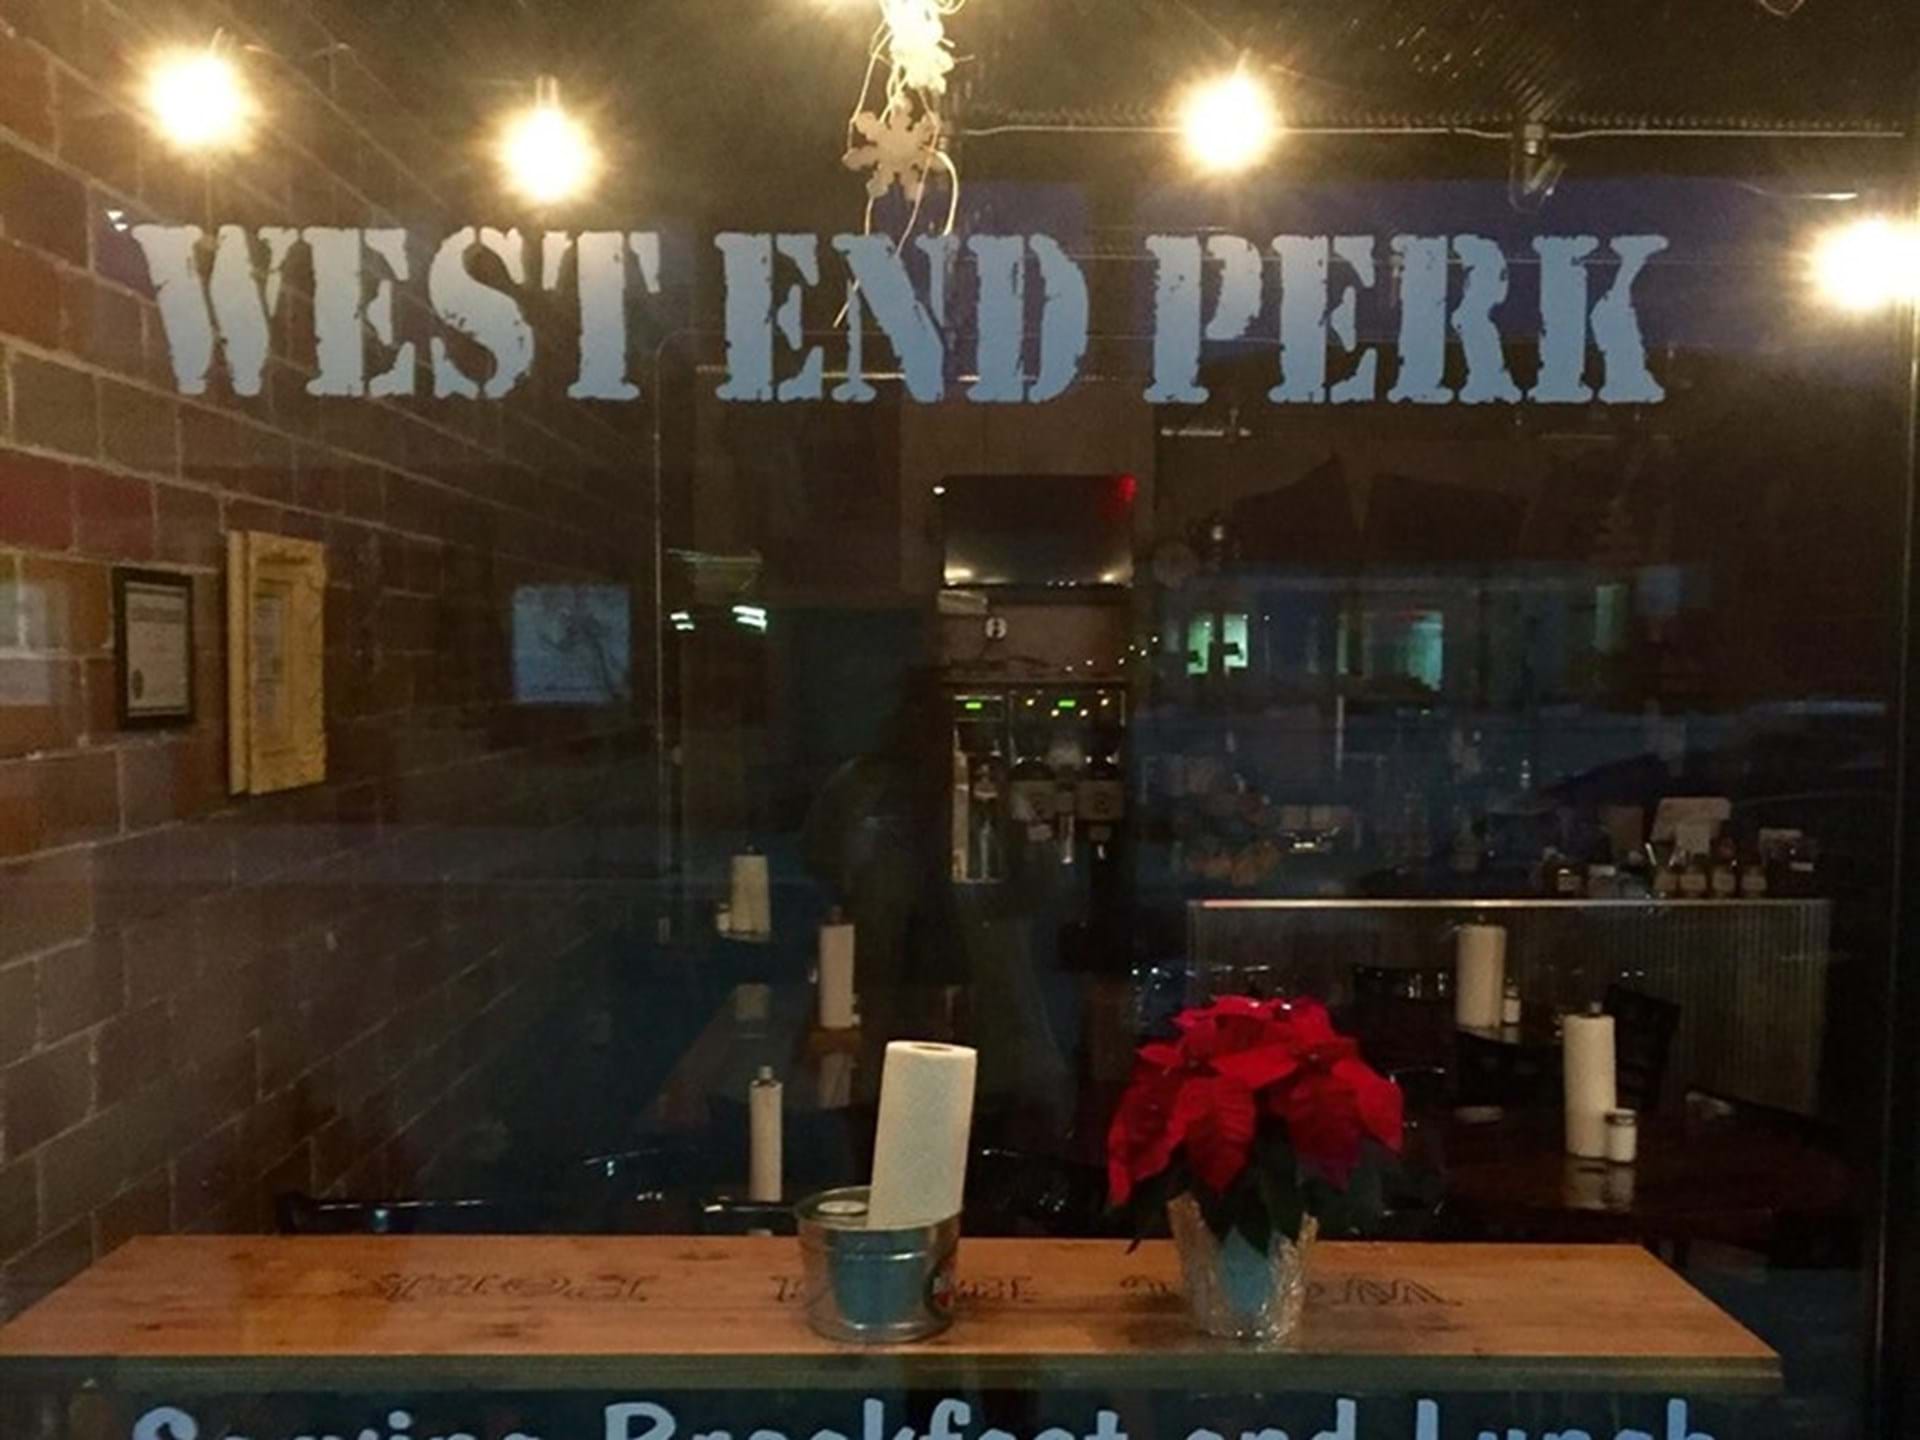 West End Perk